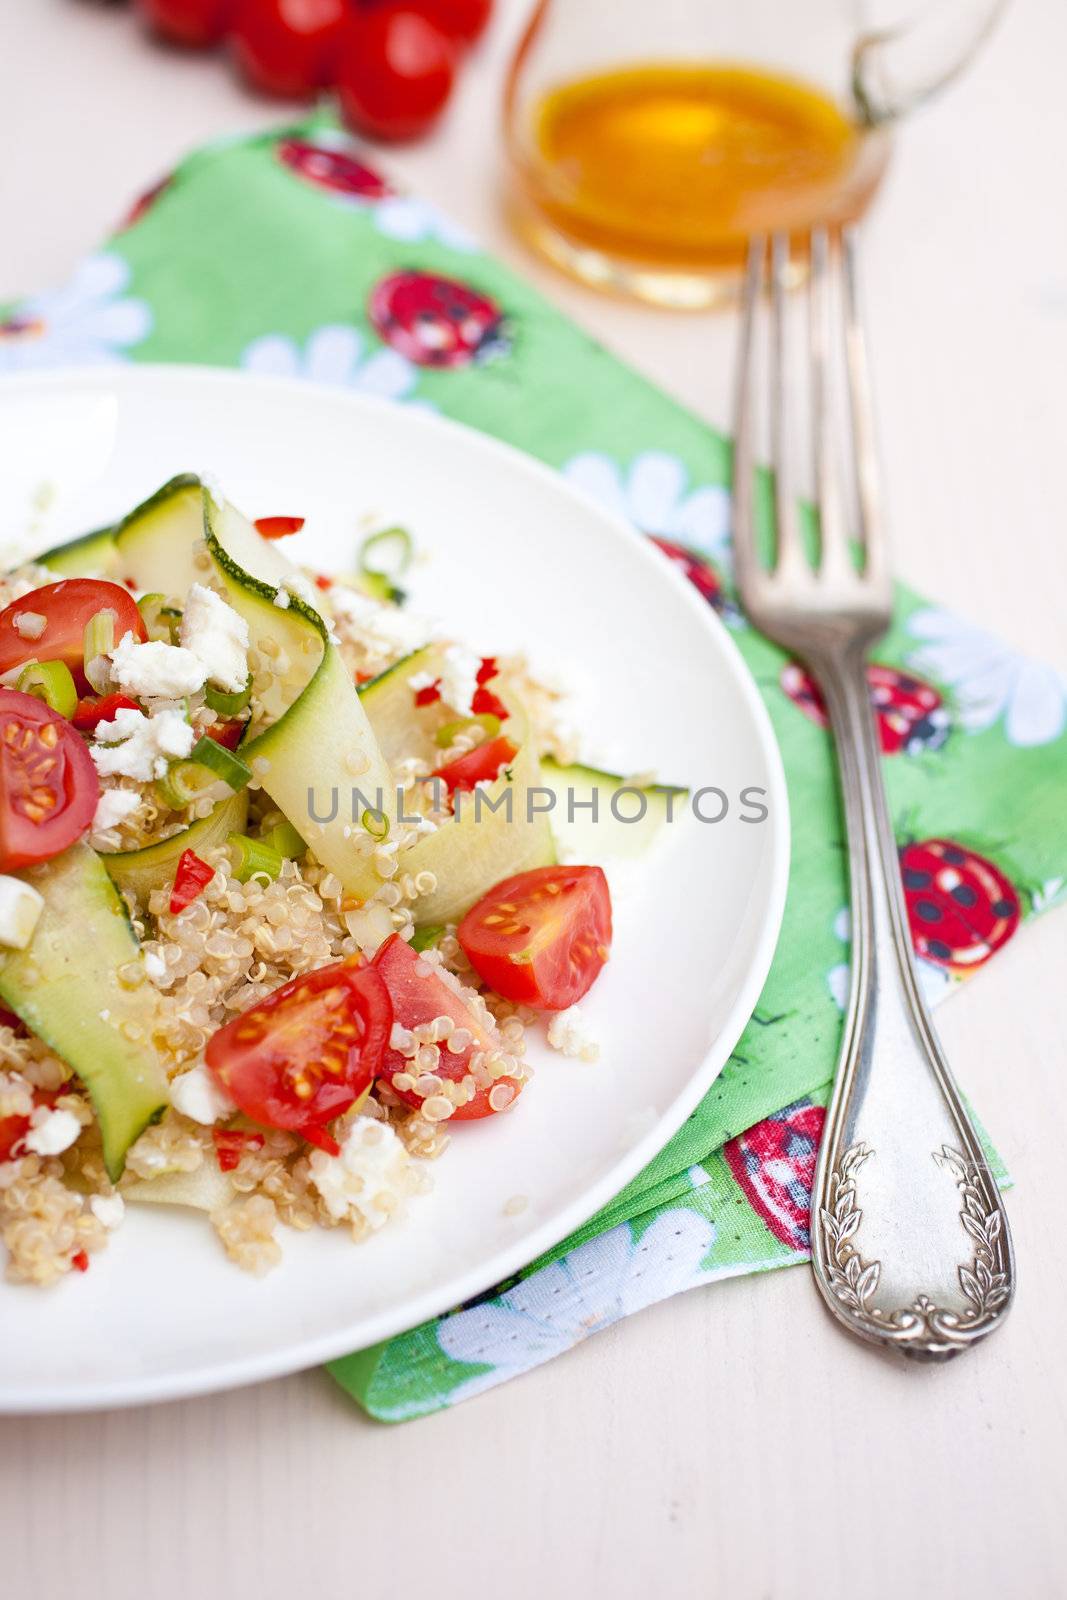 Delicious and healthy quinoa salad by Fotosmurf